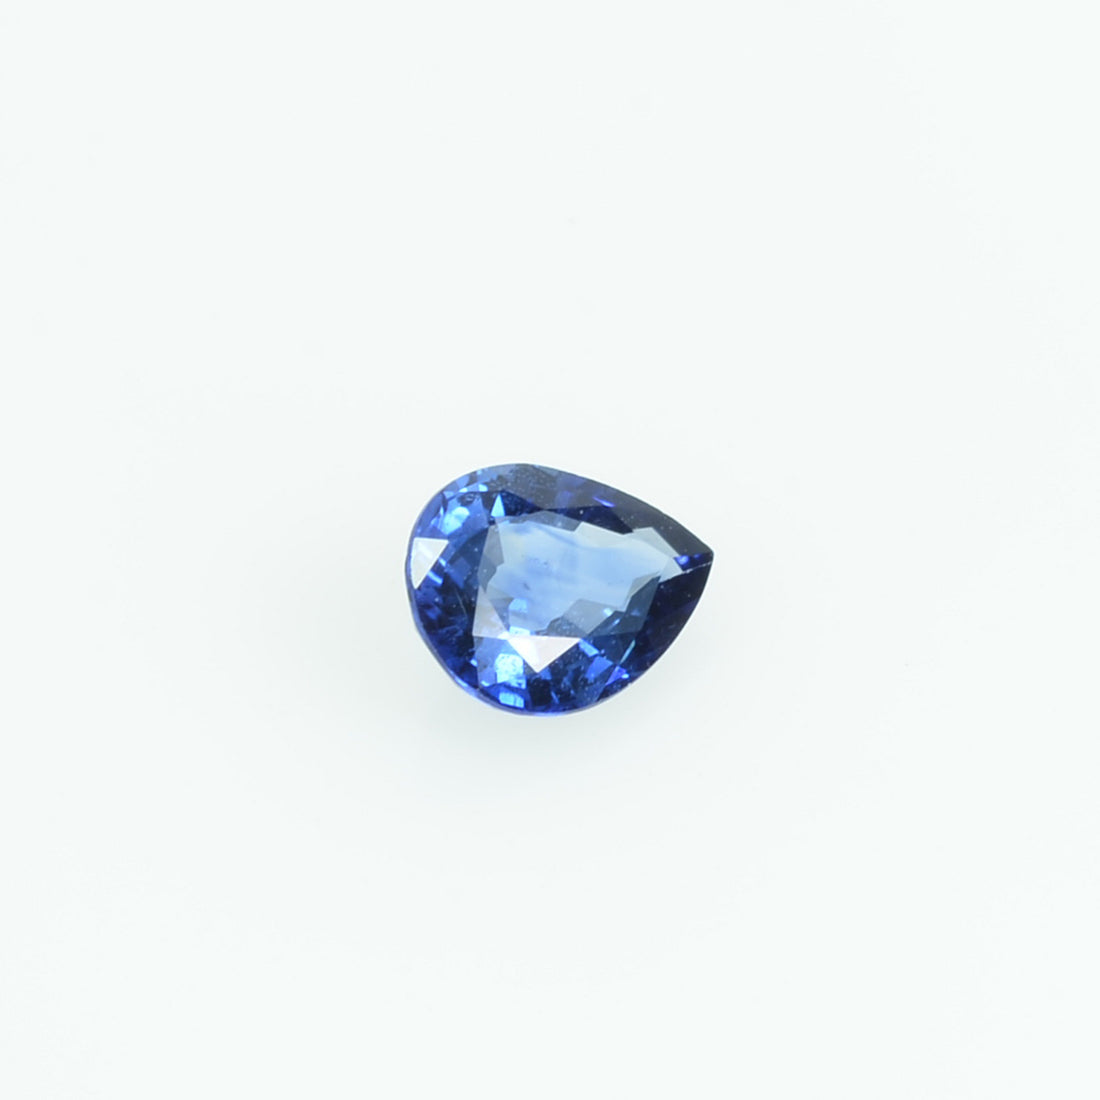 0.24 Cts Natural Blue Sapphire Loose Gemstone Pear Cut - Thai Gems Export Ltd.